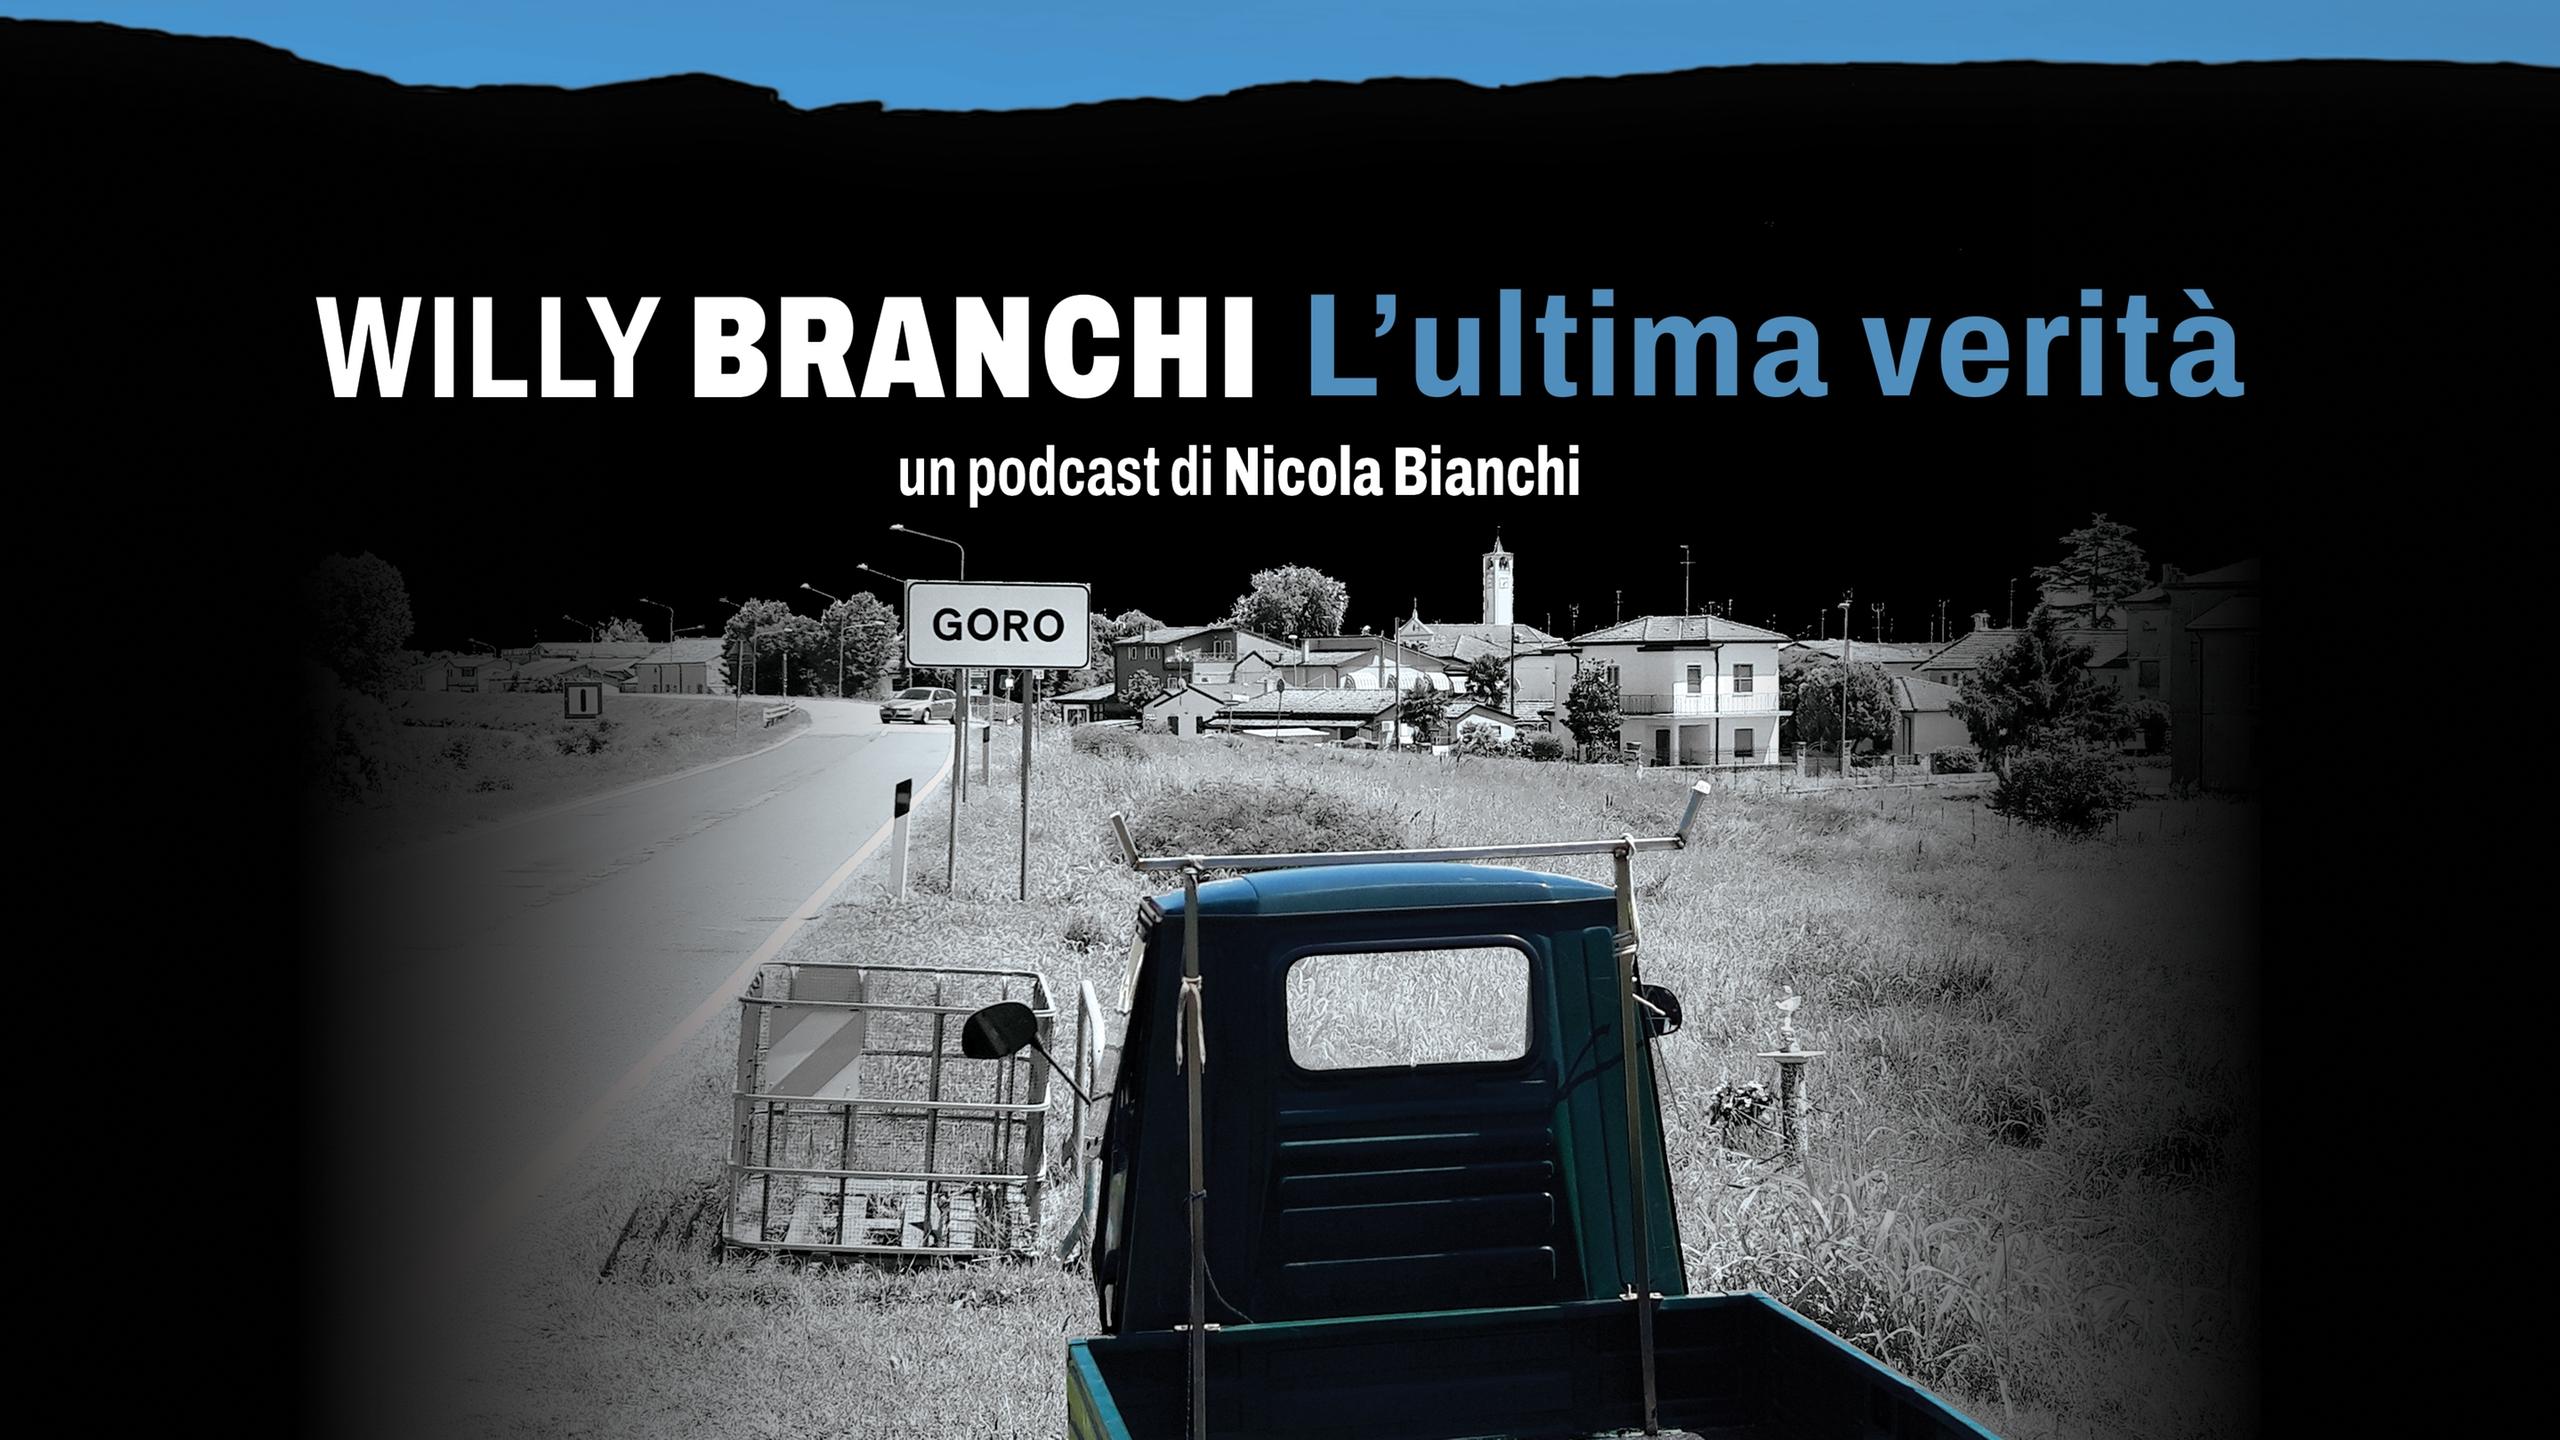 Willy Branchi 